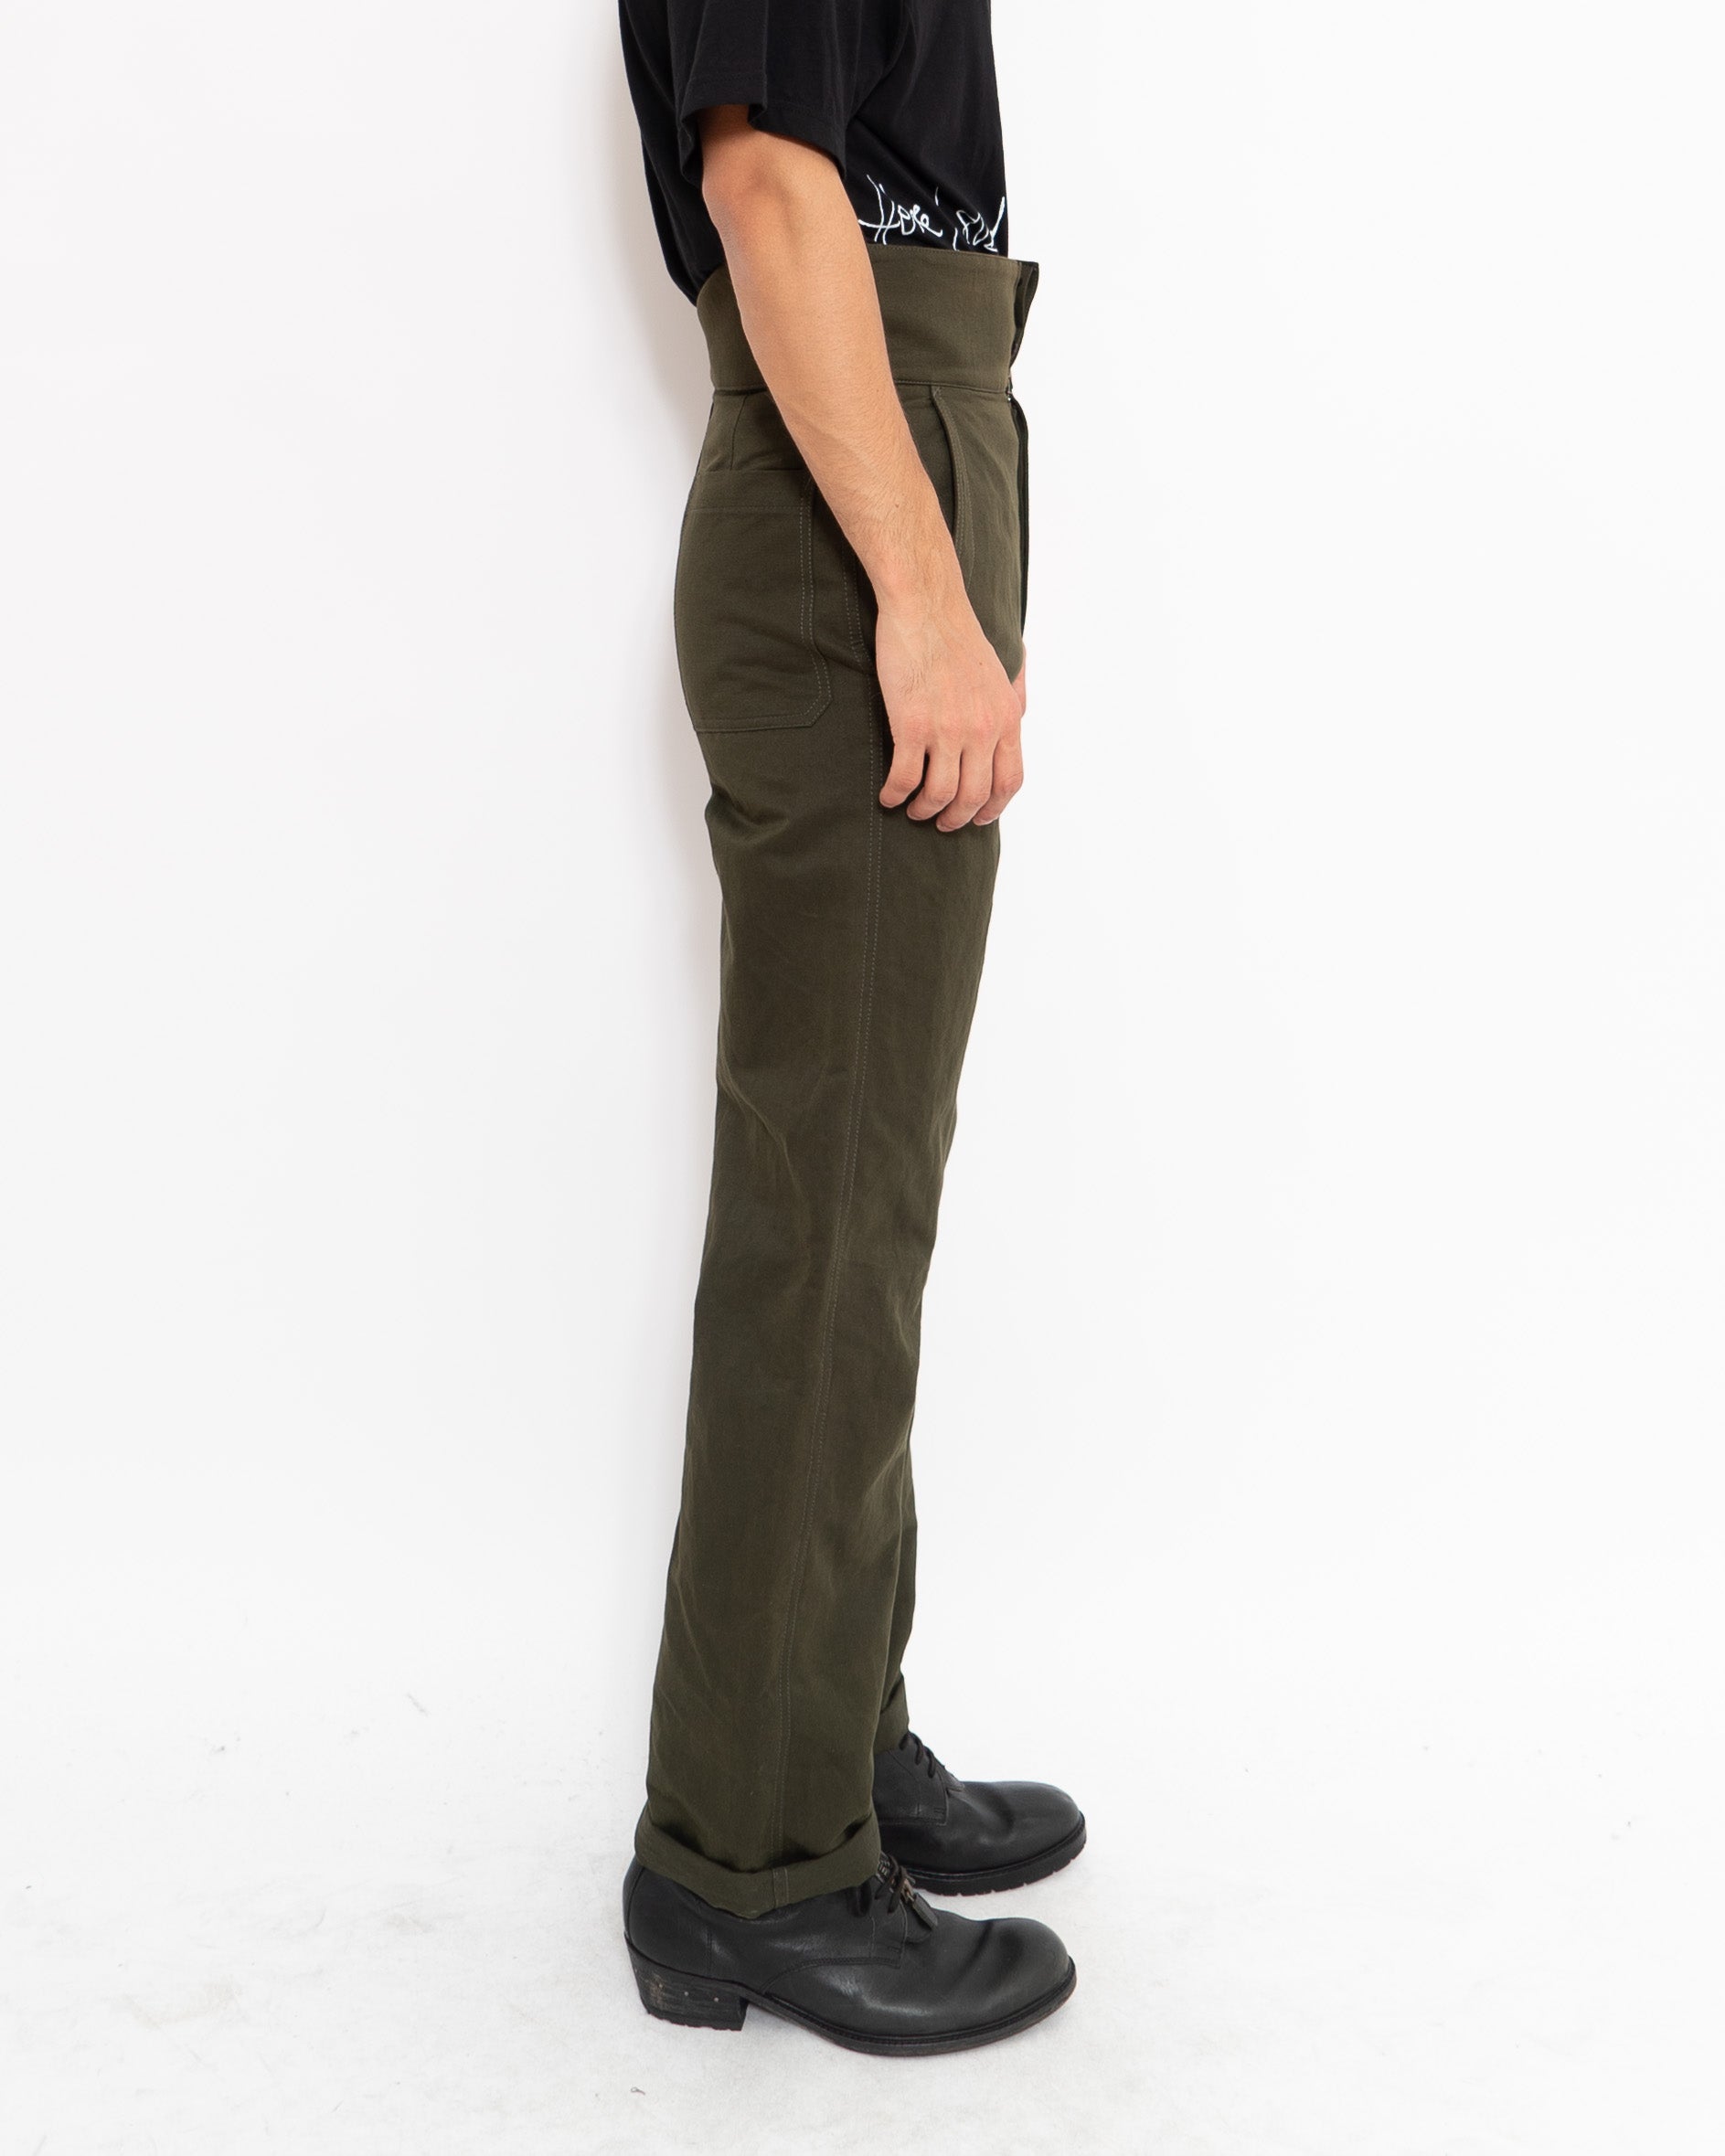 SS20 Trooper Khaki Workwear Trousers Sample